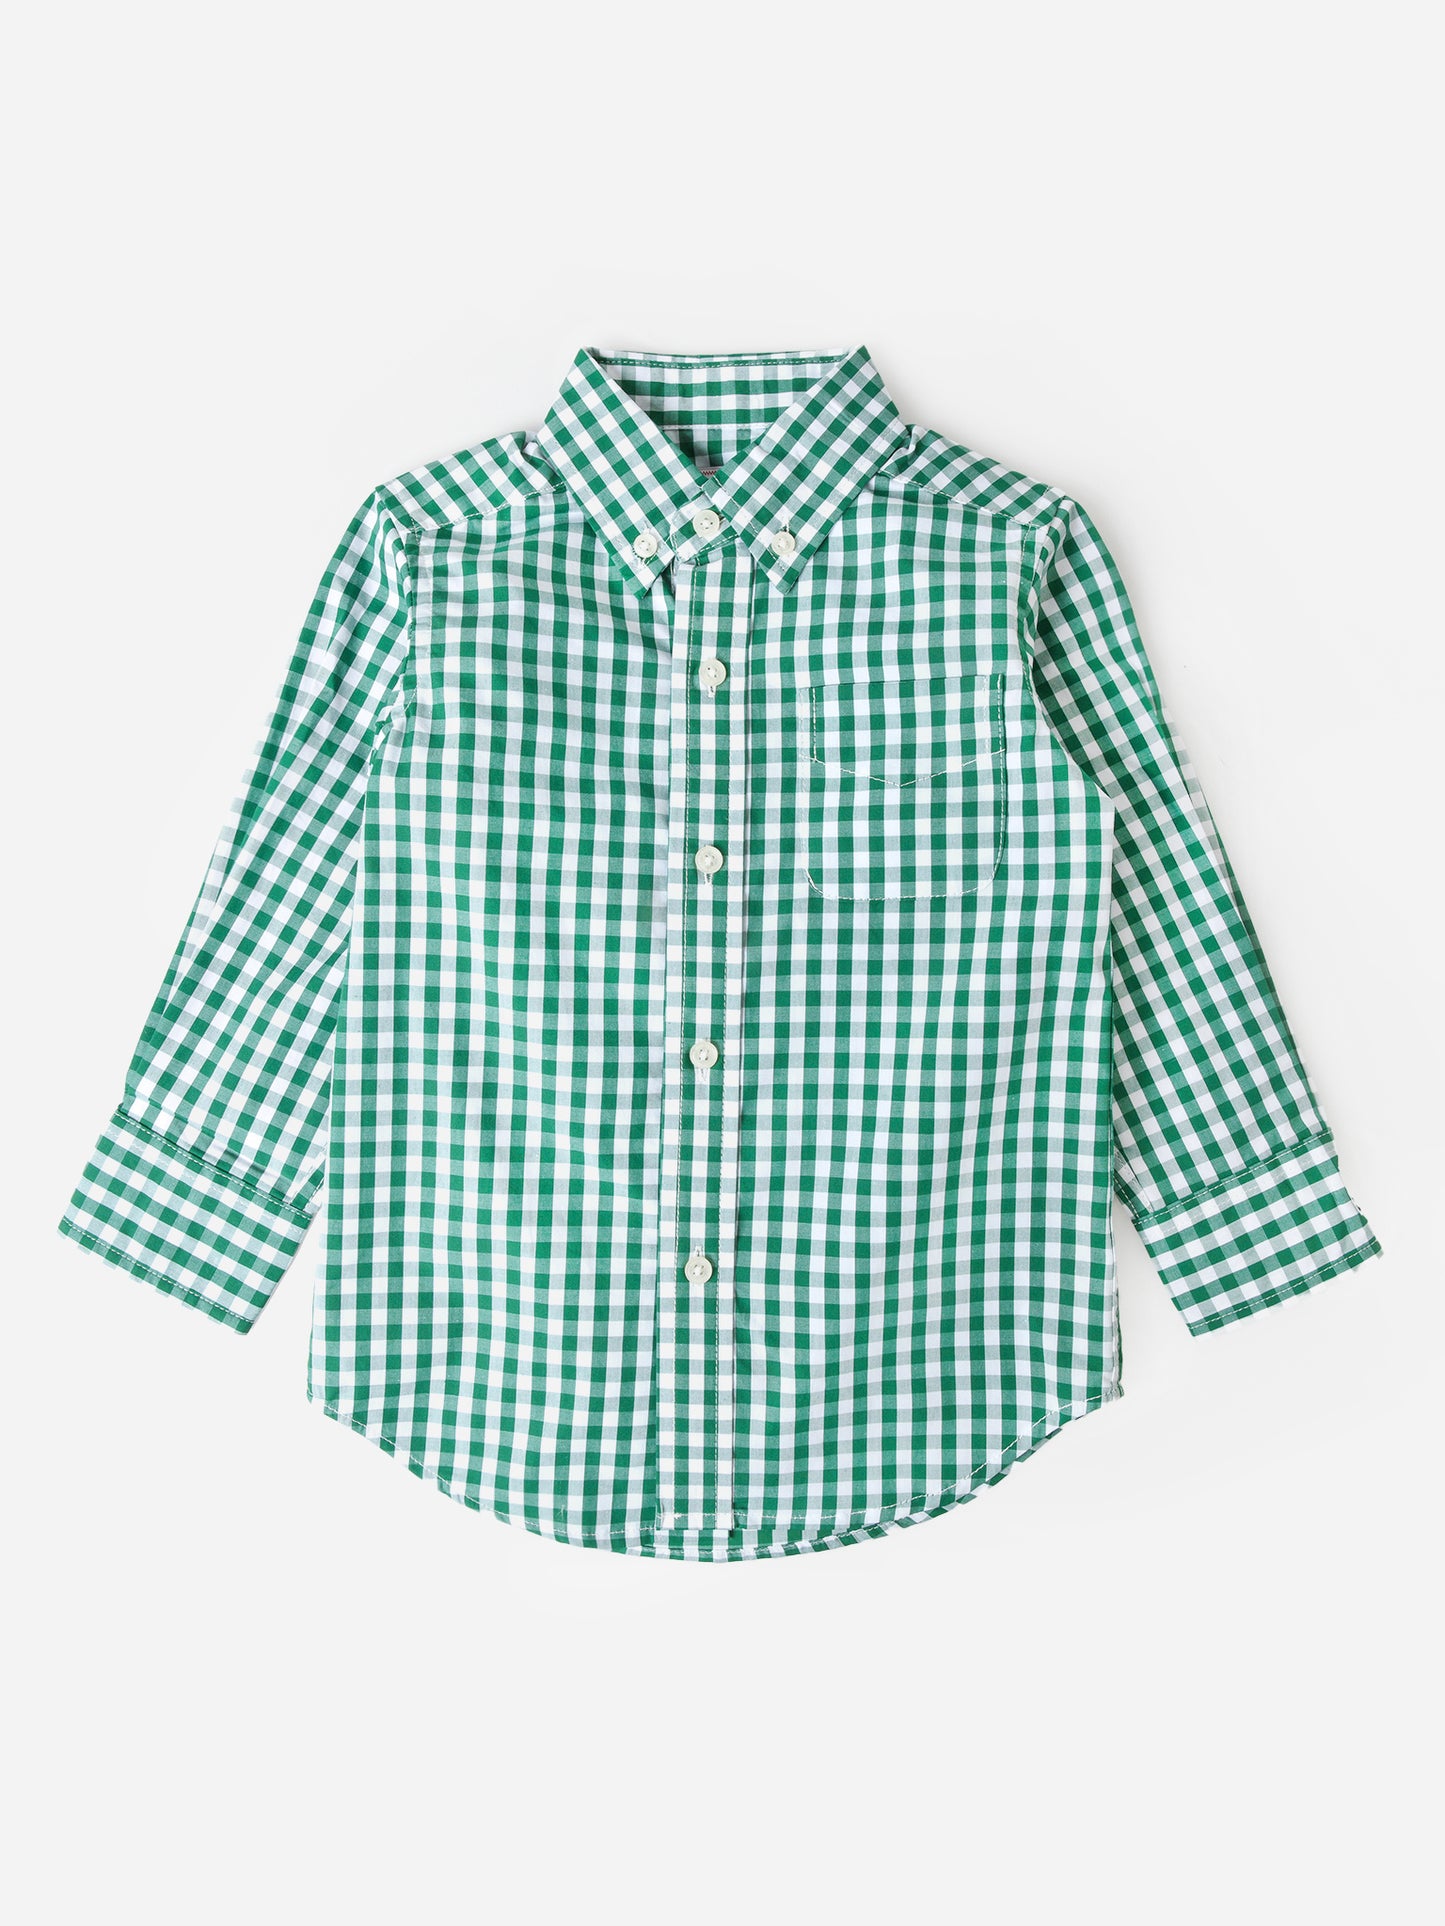 Classic Prep Boys' Owen Button-Down Shirt